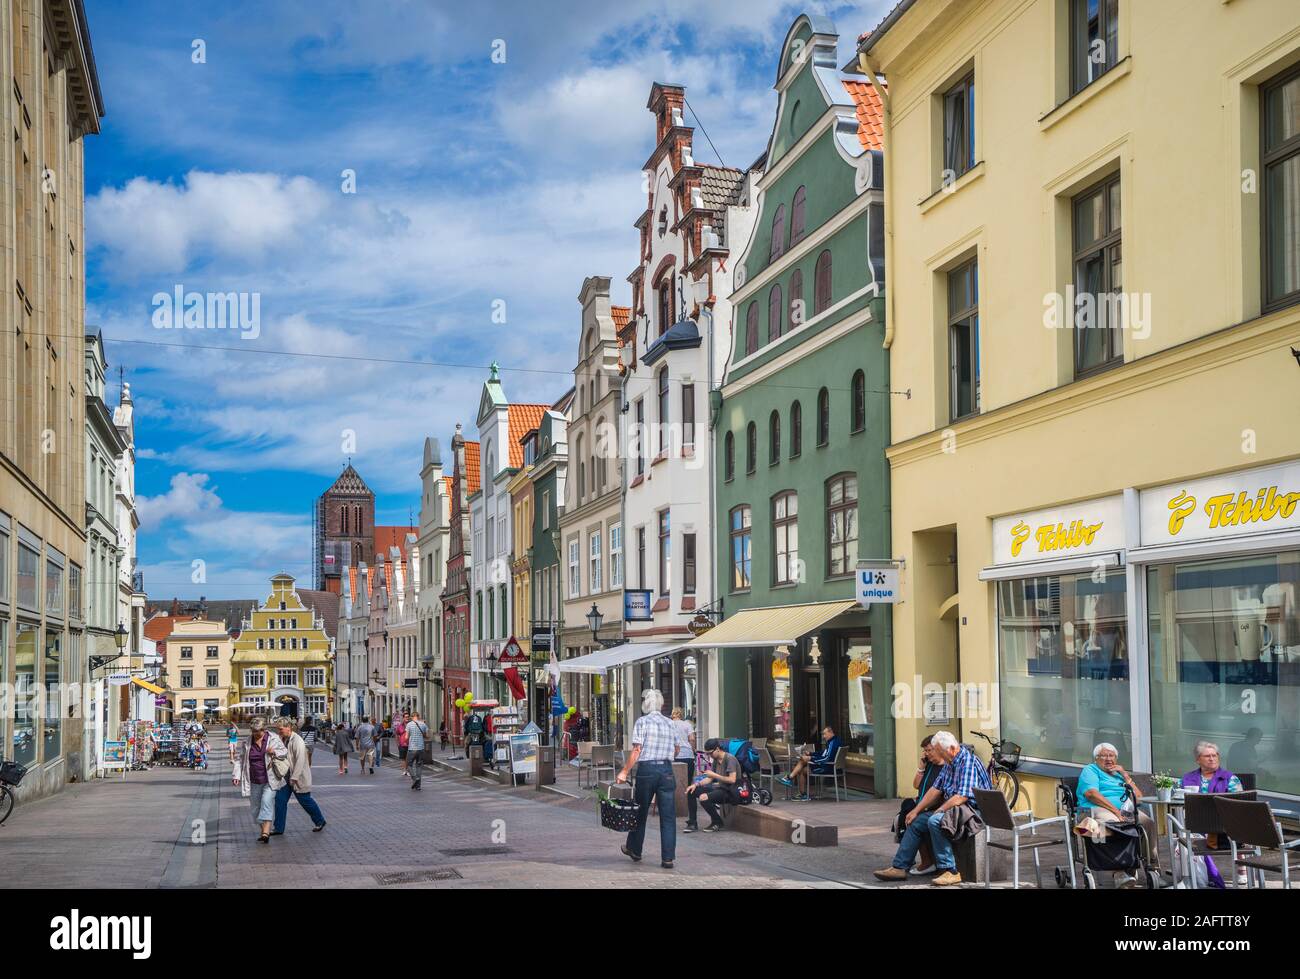 Krämerstraße in the historic center of the Hanseatic City of Wismar, Mecklenburg-Vorpommern, Germany Stock Photo